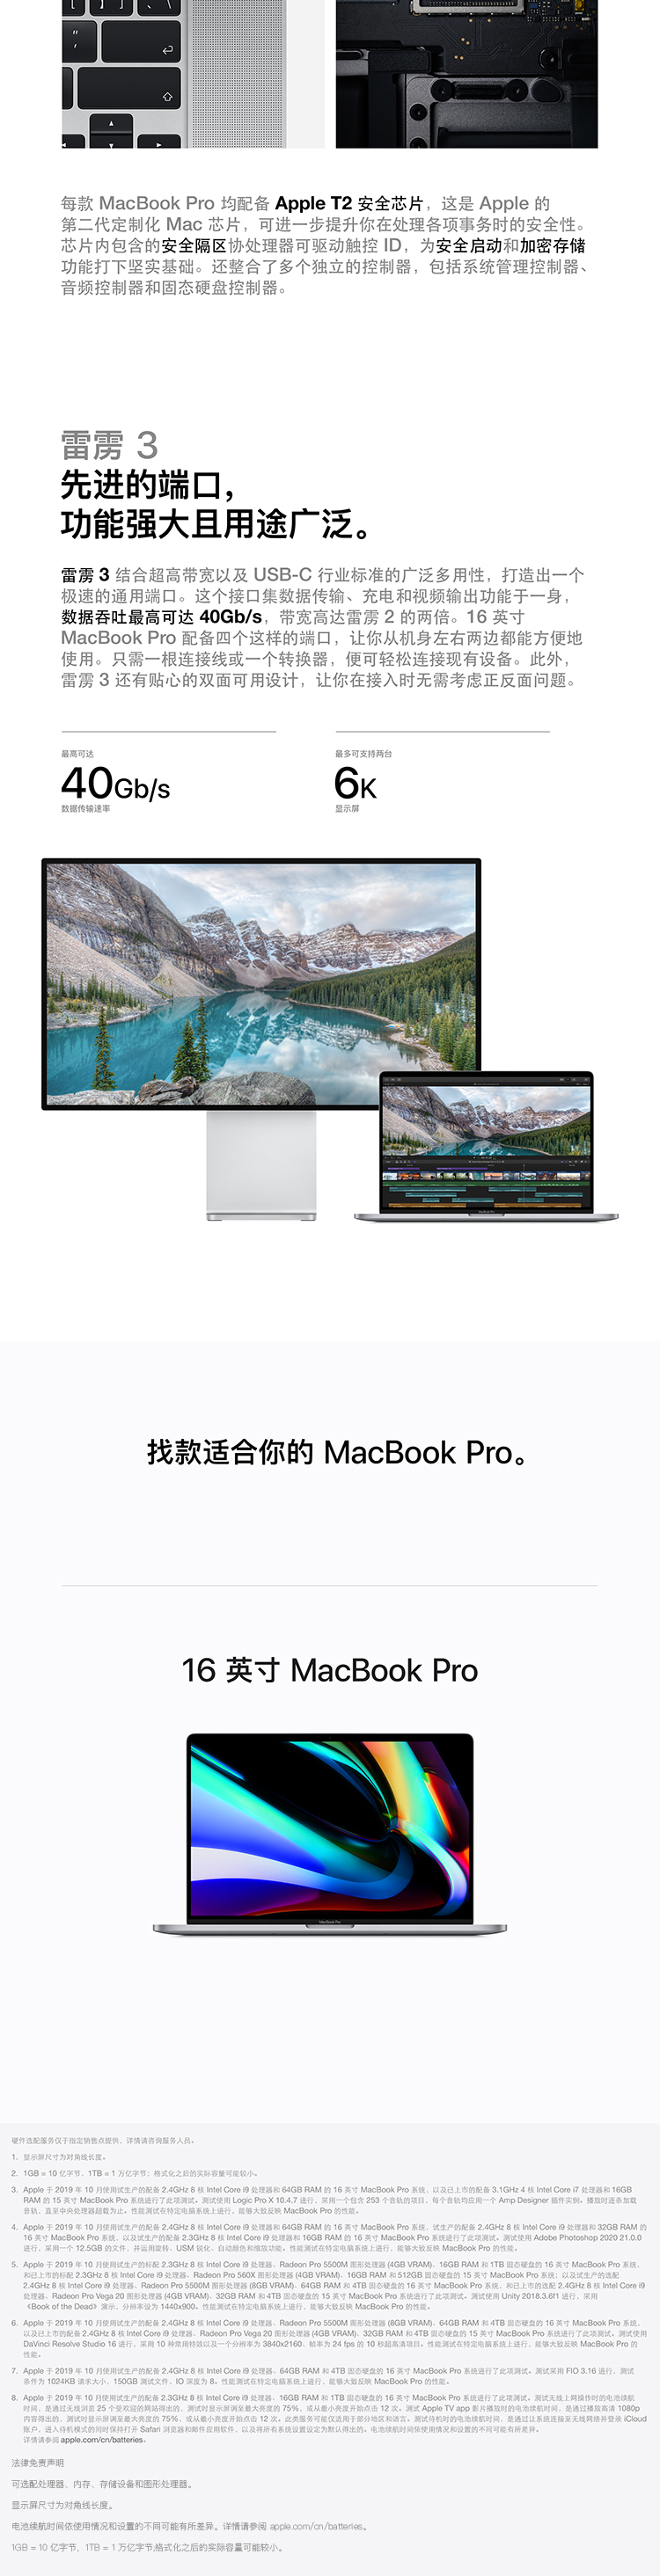 Apple 2019新品 MacBook Pro 16【带触控栏】九代八核i9 16G 1TB 深空灰 Radeon Pro 5500M显卡 笔记本电脑 轻薄本 MVVK2CH/A